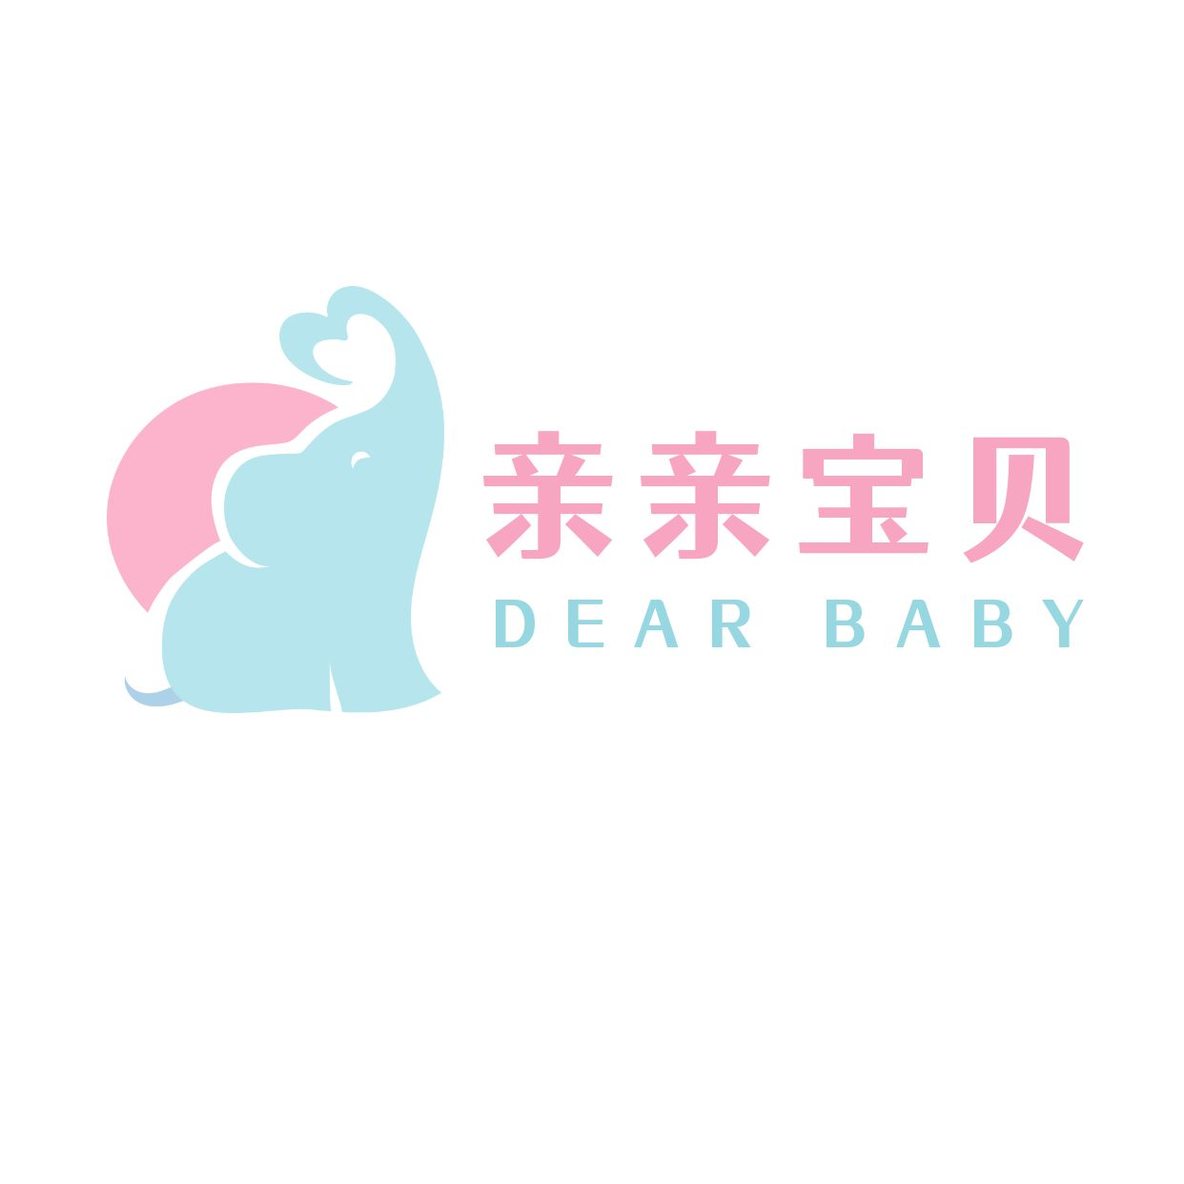 母婴大象logo